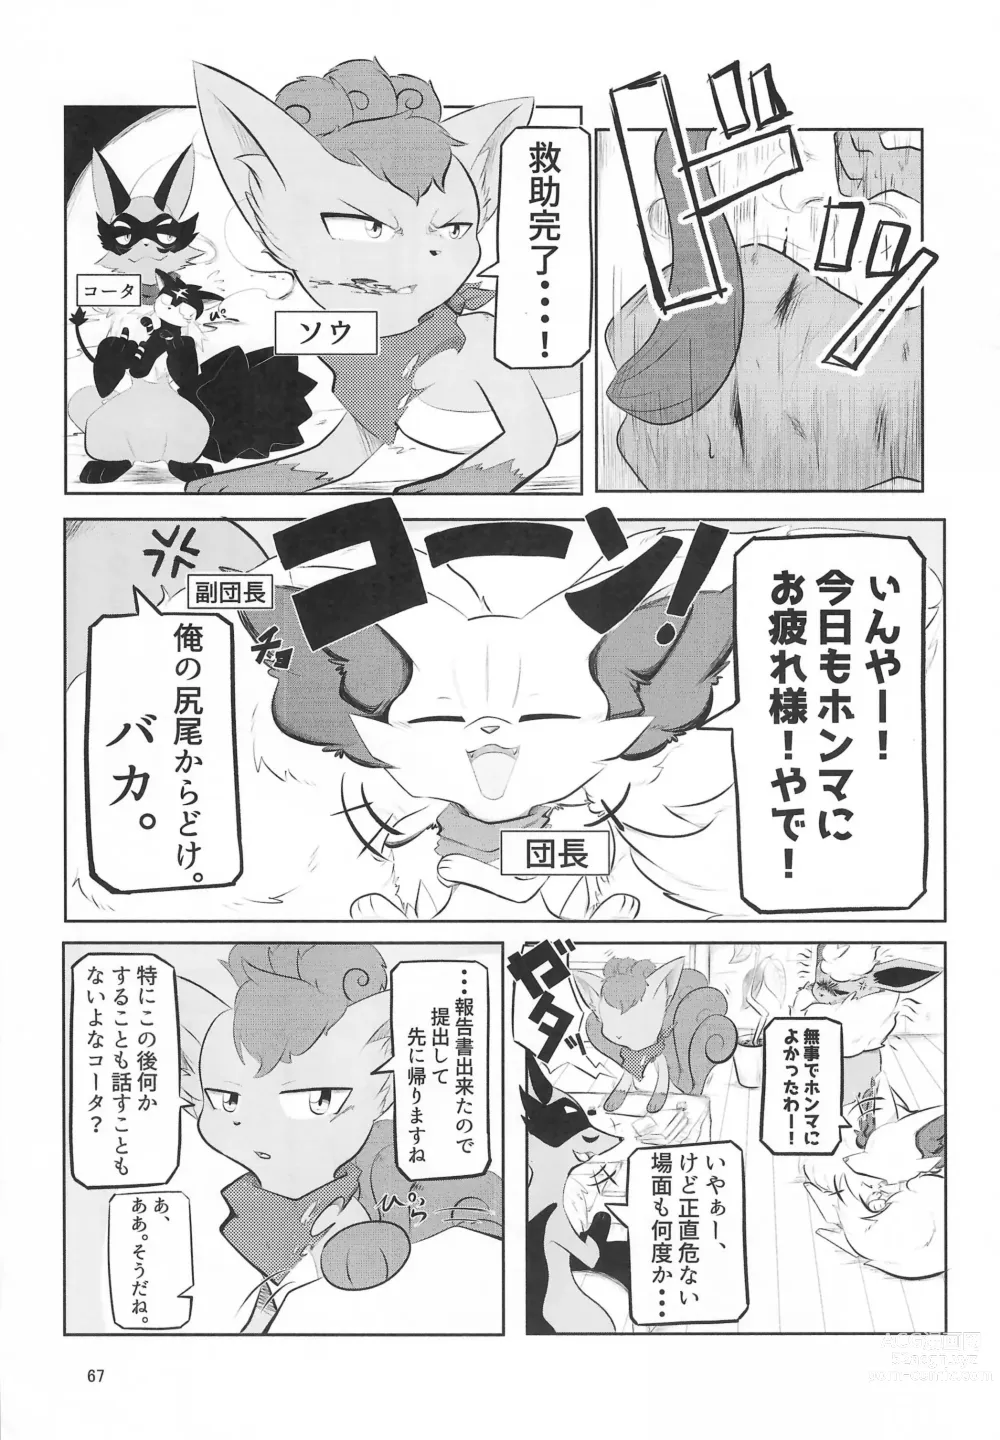 Page 67 of doujinshi Yotsu Ashi BL Anthology K9S